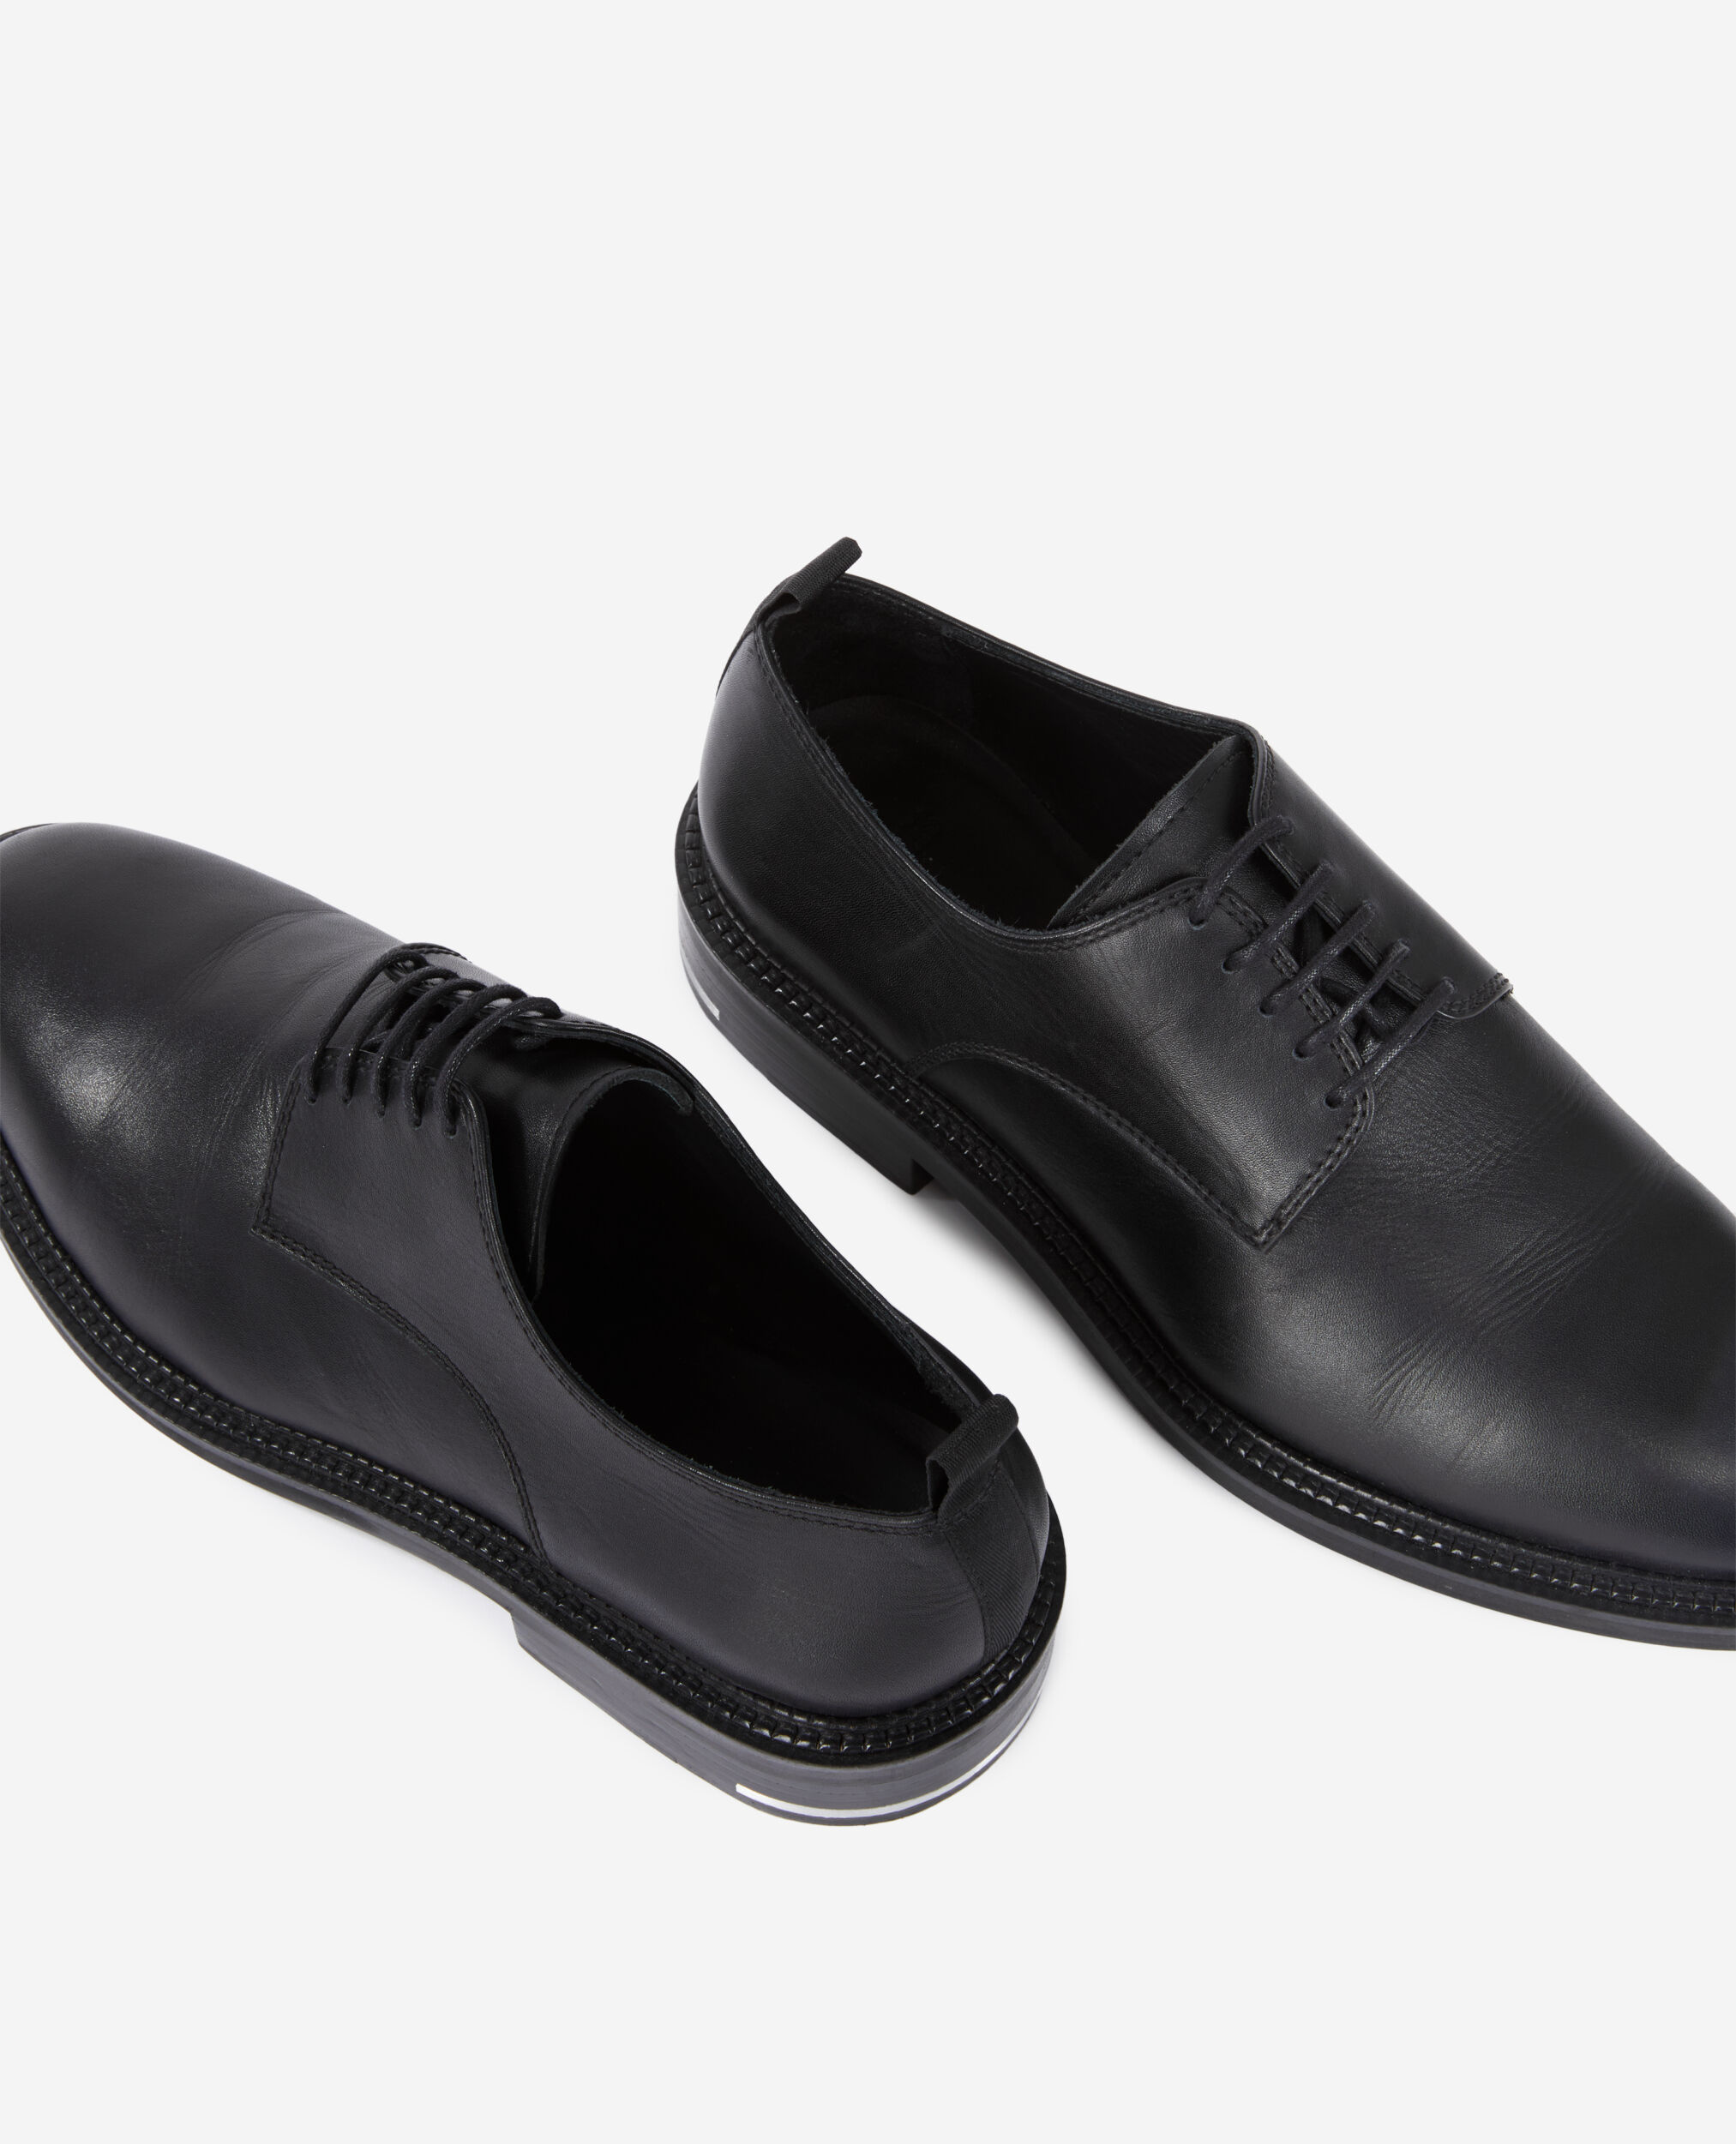 Zapatos cordones piel negros, BLACK, hi-res image number null